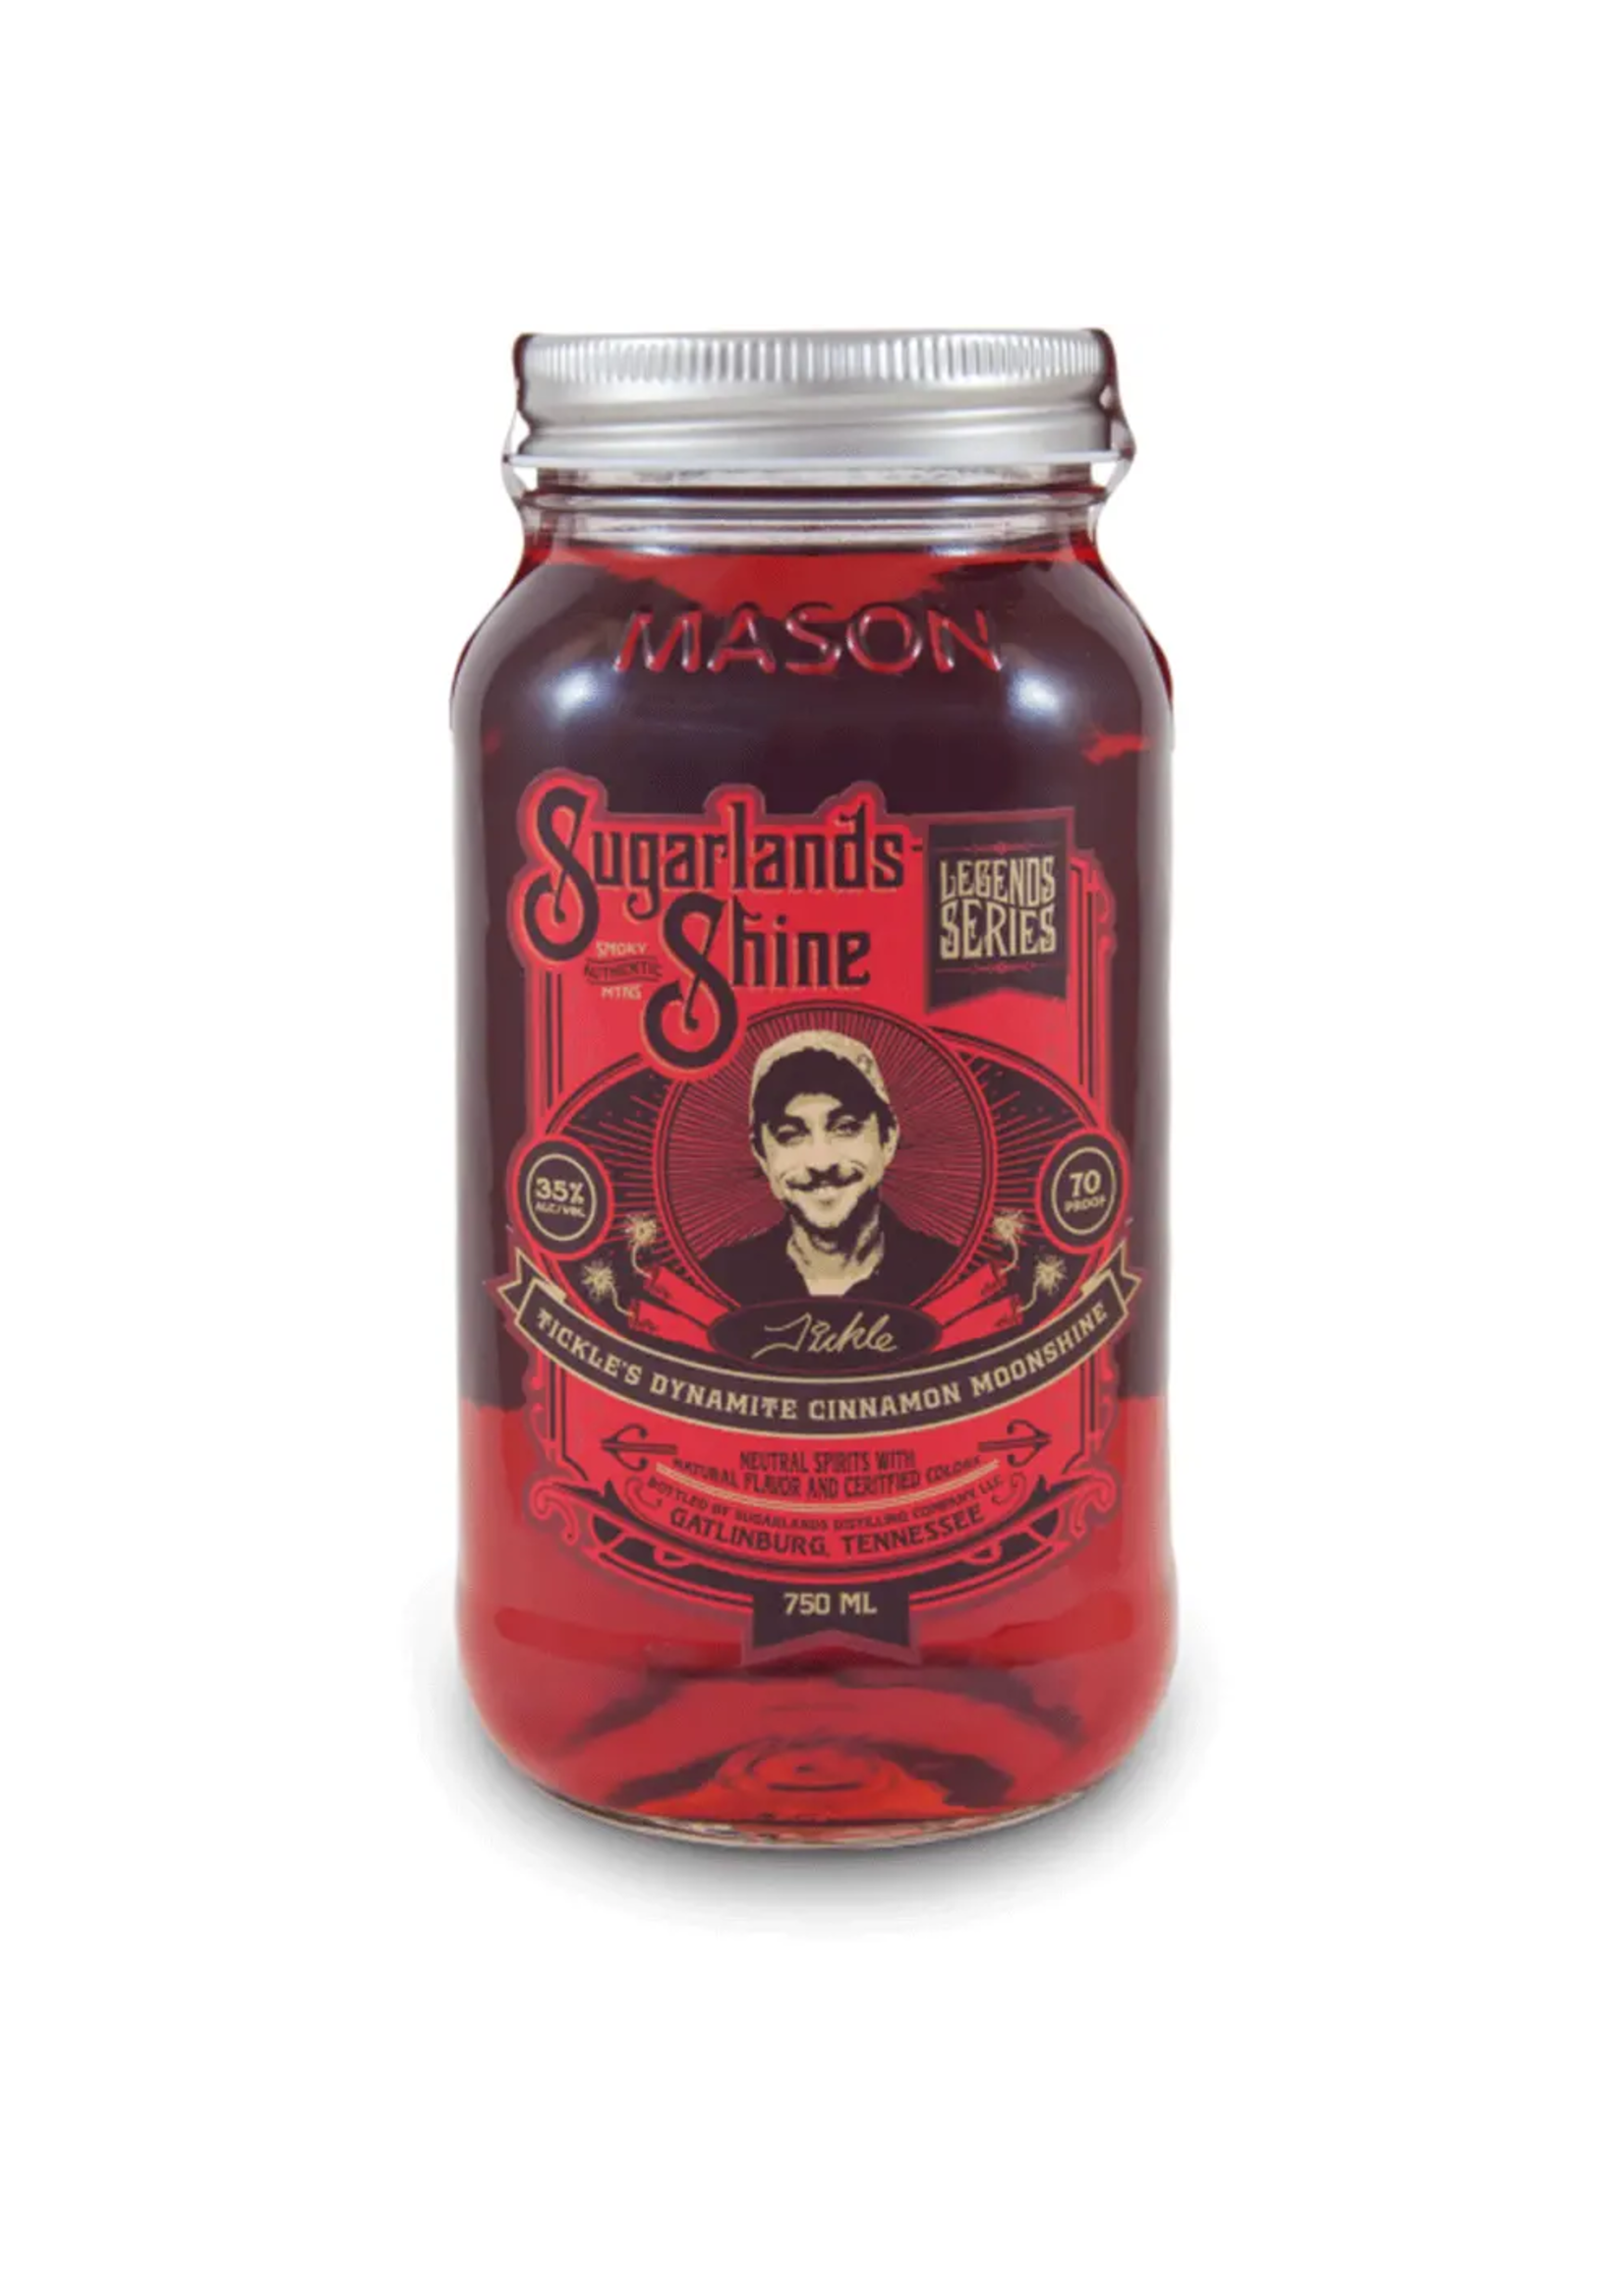 Sugarlands Moonshine & Sippin Cream Sugarlands Shine Tickles Dynamite Cinnamon Moonshine 70Proof Jar 750ml